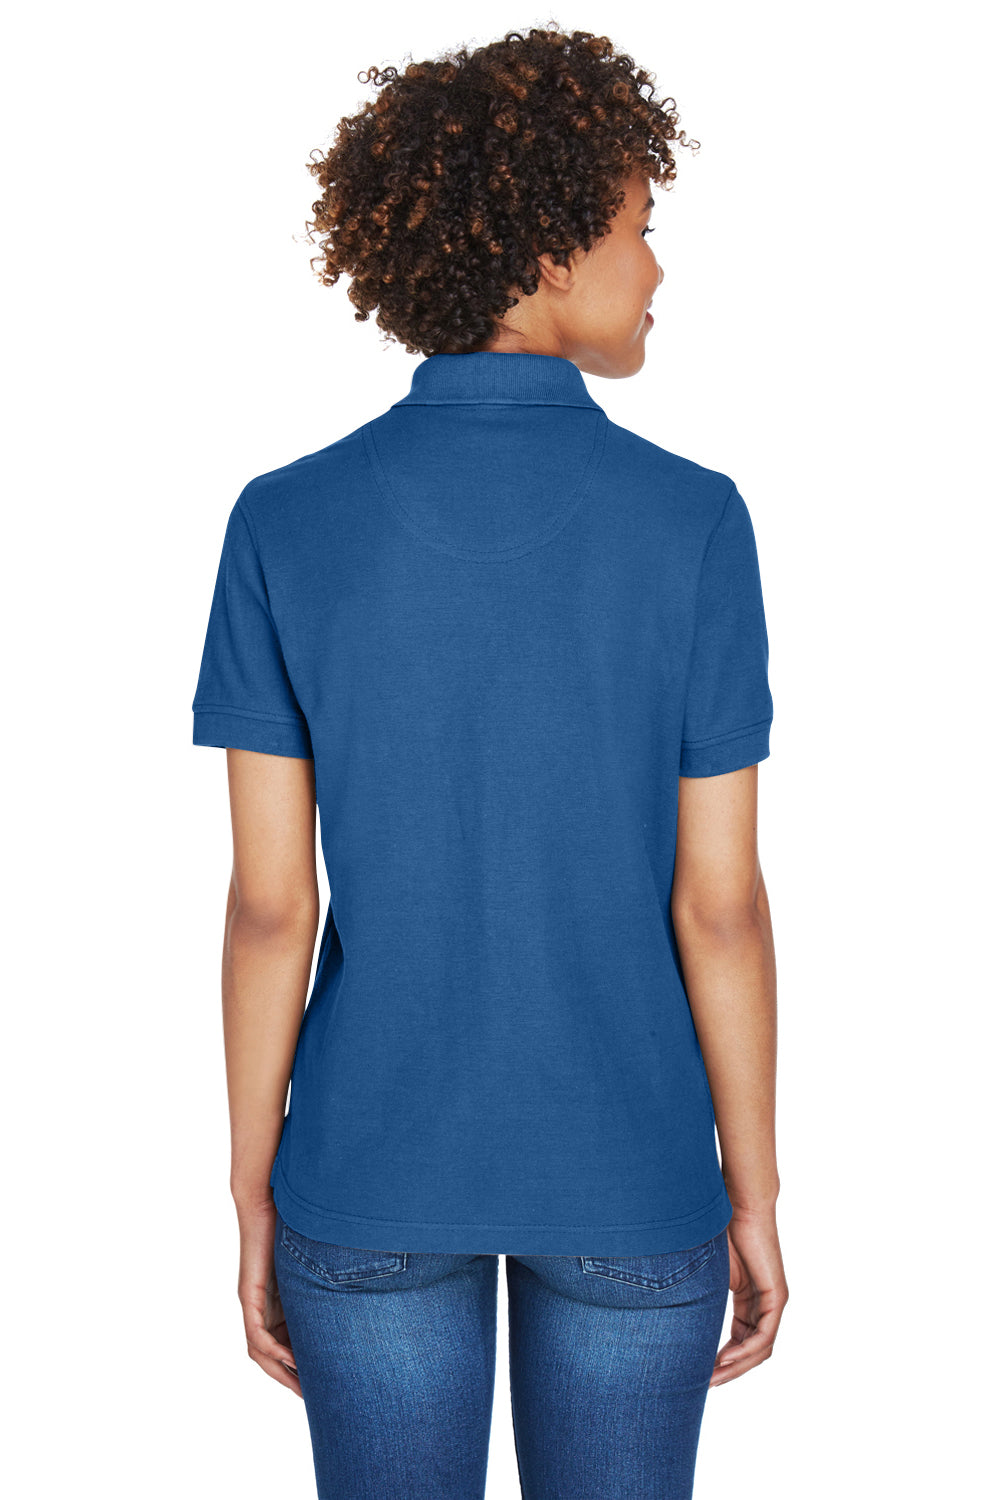 UltraClub 8541 Womens Whisper Short Sleeve Polo Shirt Indigo Blue Back